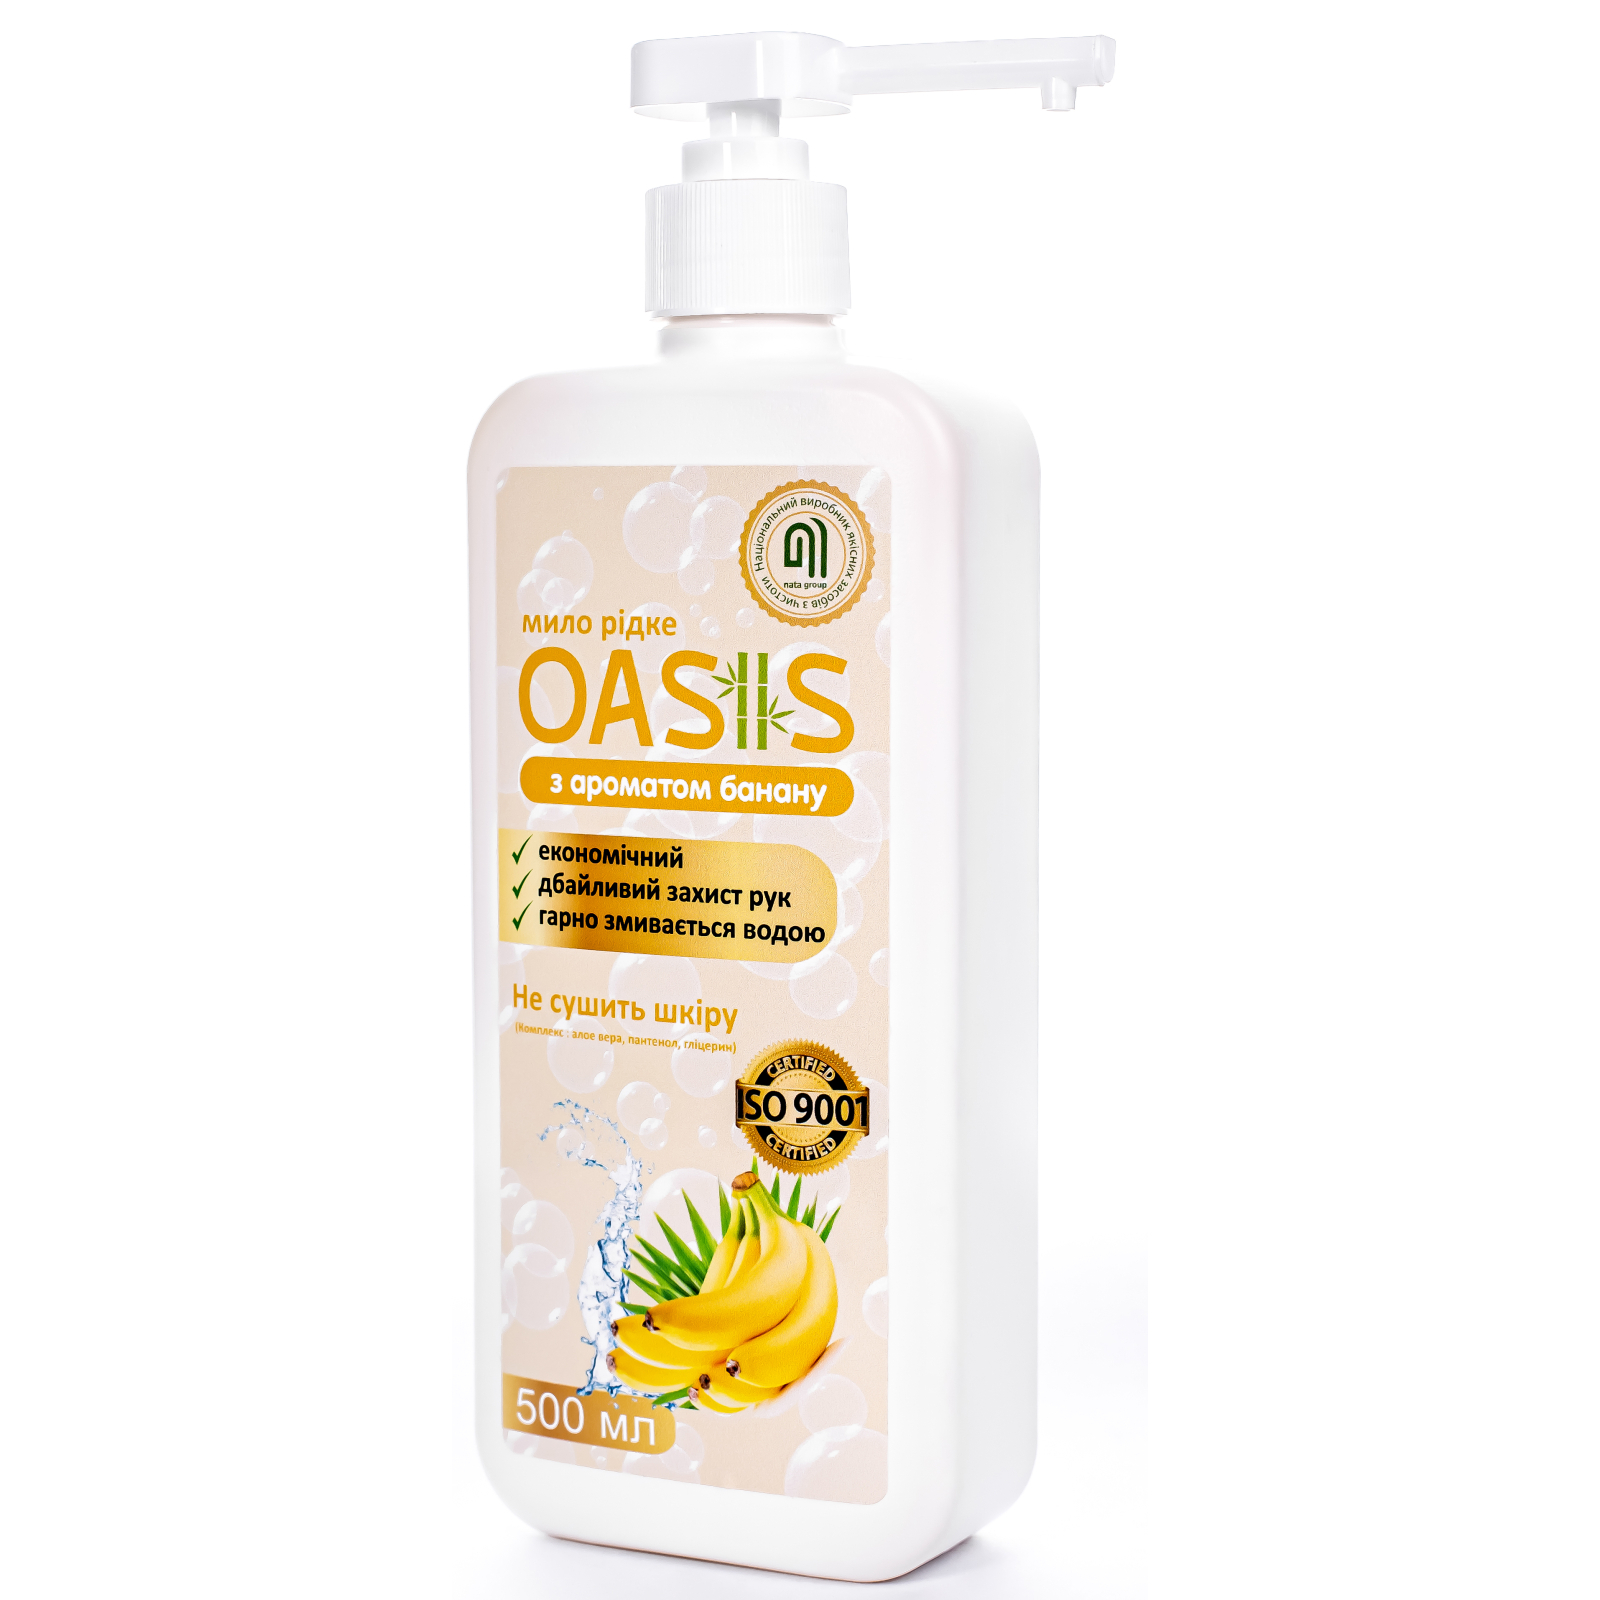 Жидкое мыло Nata Group Oasis С ароматом банана 1000 мл (4823112601127) изображение 2